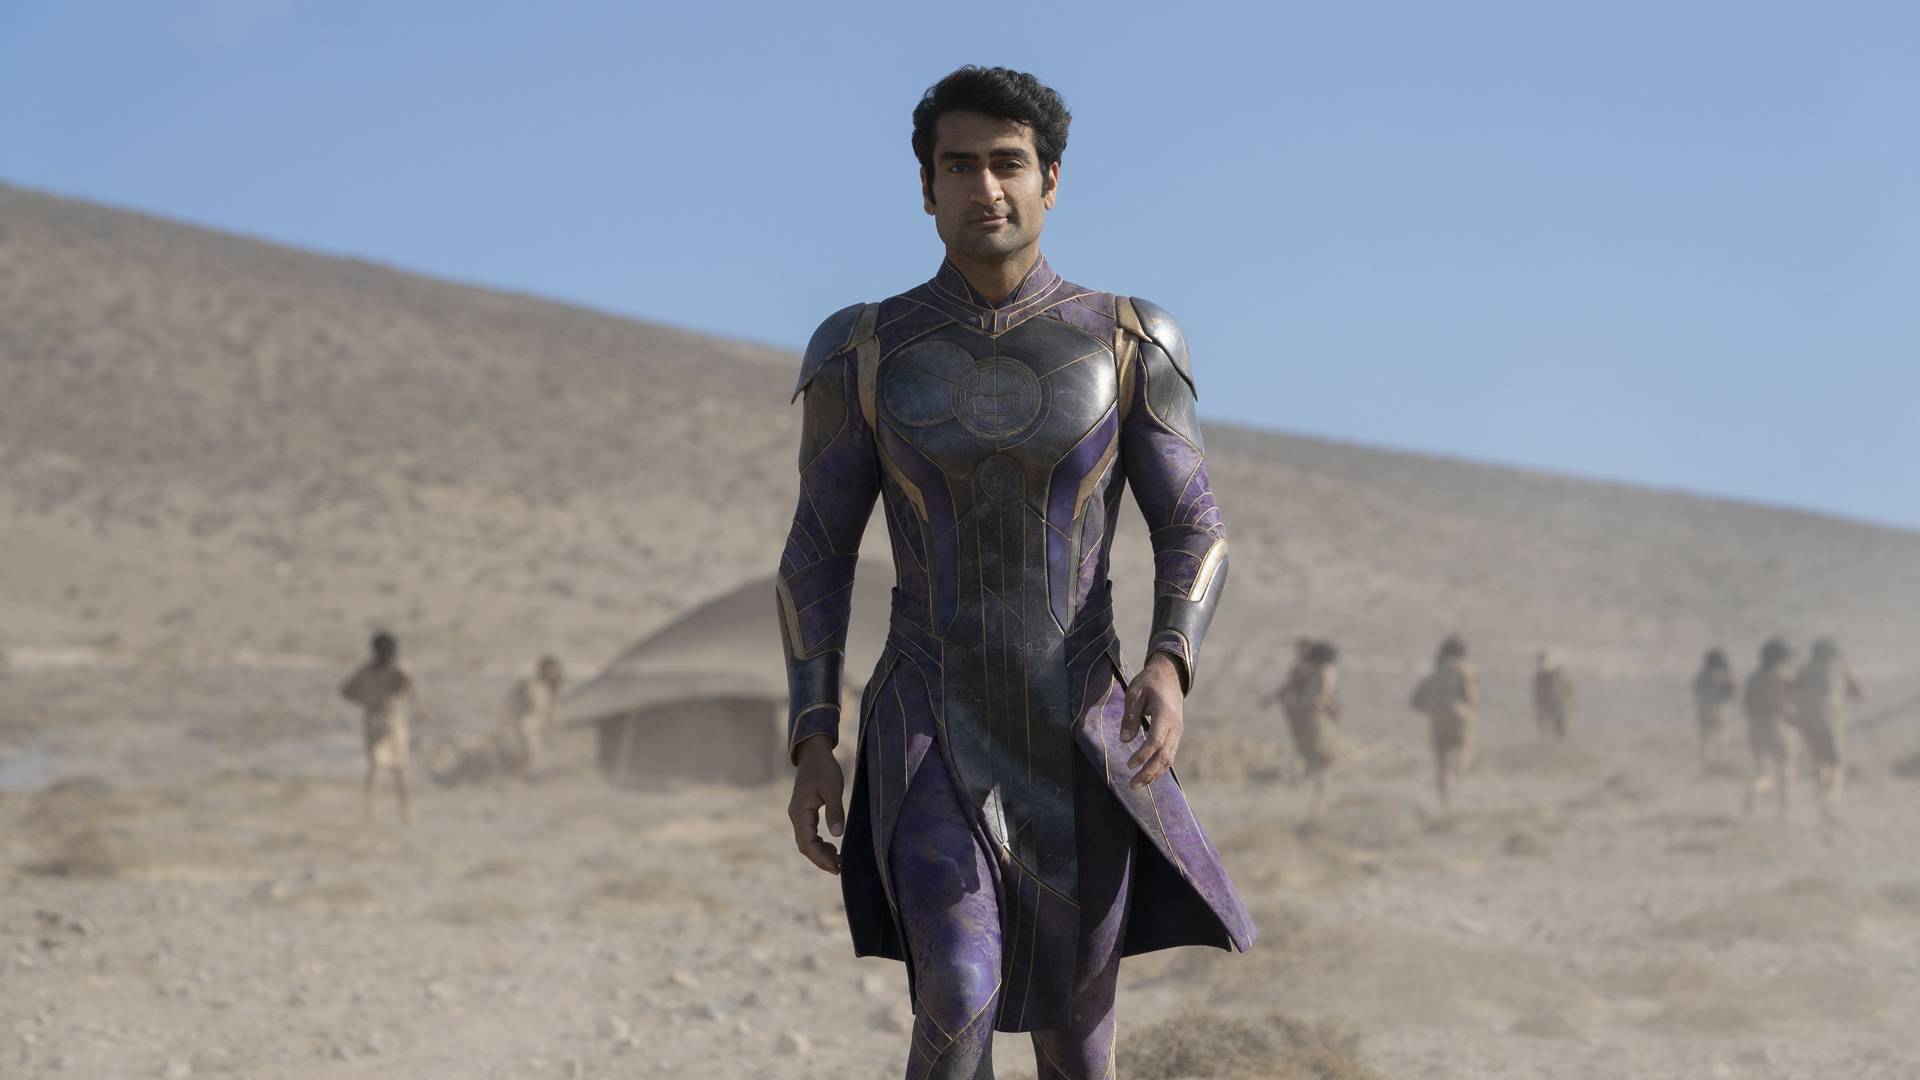 Kumail Nanjiani confidently walks towards camera as Kingo in Marvel Studios' Eternals movie